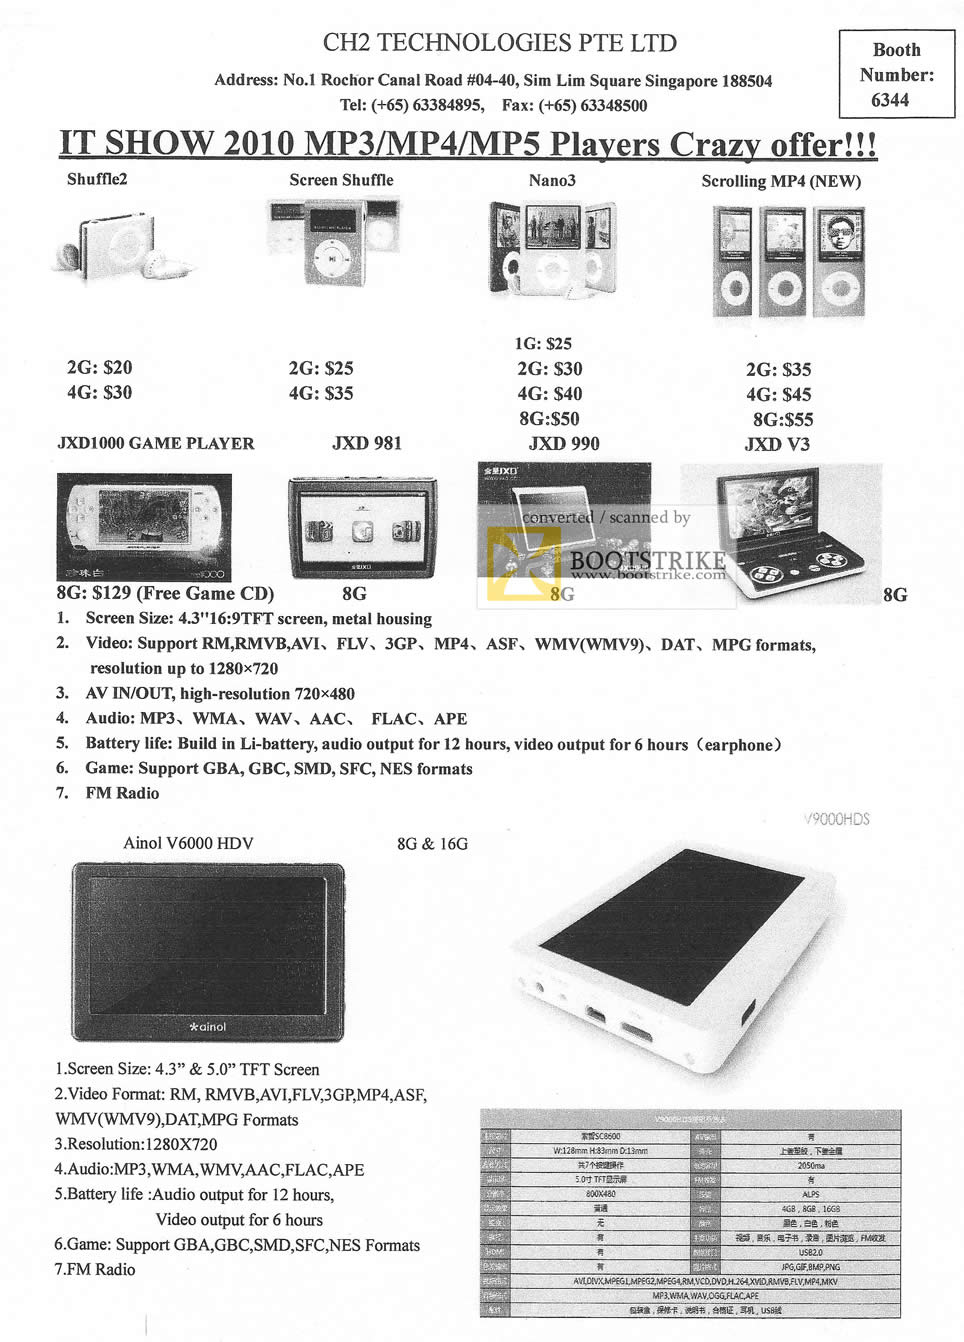 IT Show 2010 price list image brochure of CH2 MP3 Players Shuffle2 Screen Shuffle Nano3 Scrolling Mp4 JXD1000 JXD 981 90 V3 Ainol V6000 HDV V9000HDS